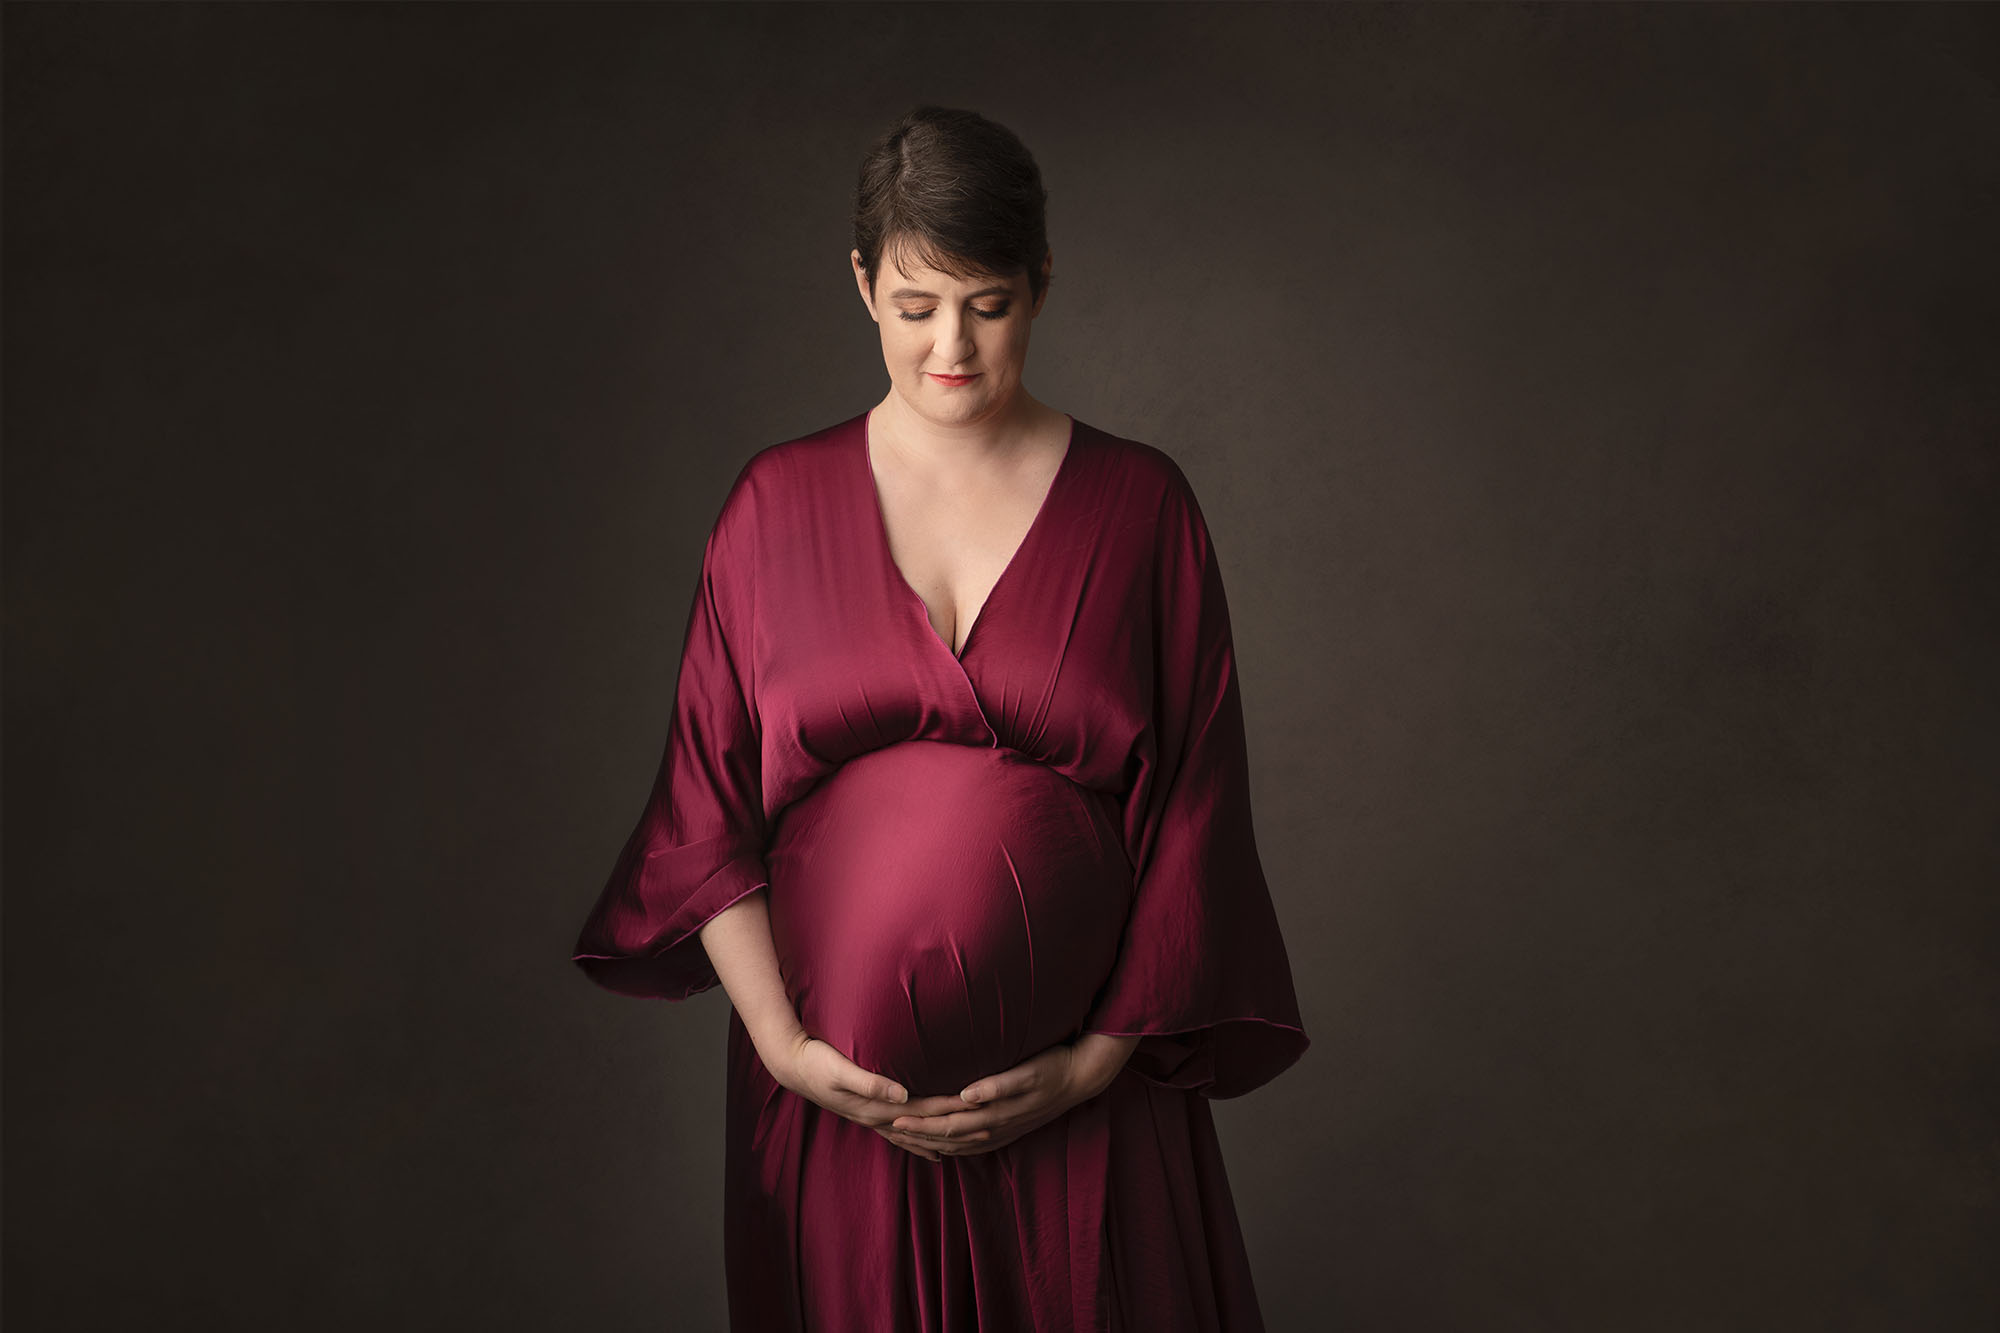 professional maternity portrait by maternity photographer Beautiful Bairns photography Scotland